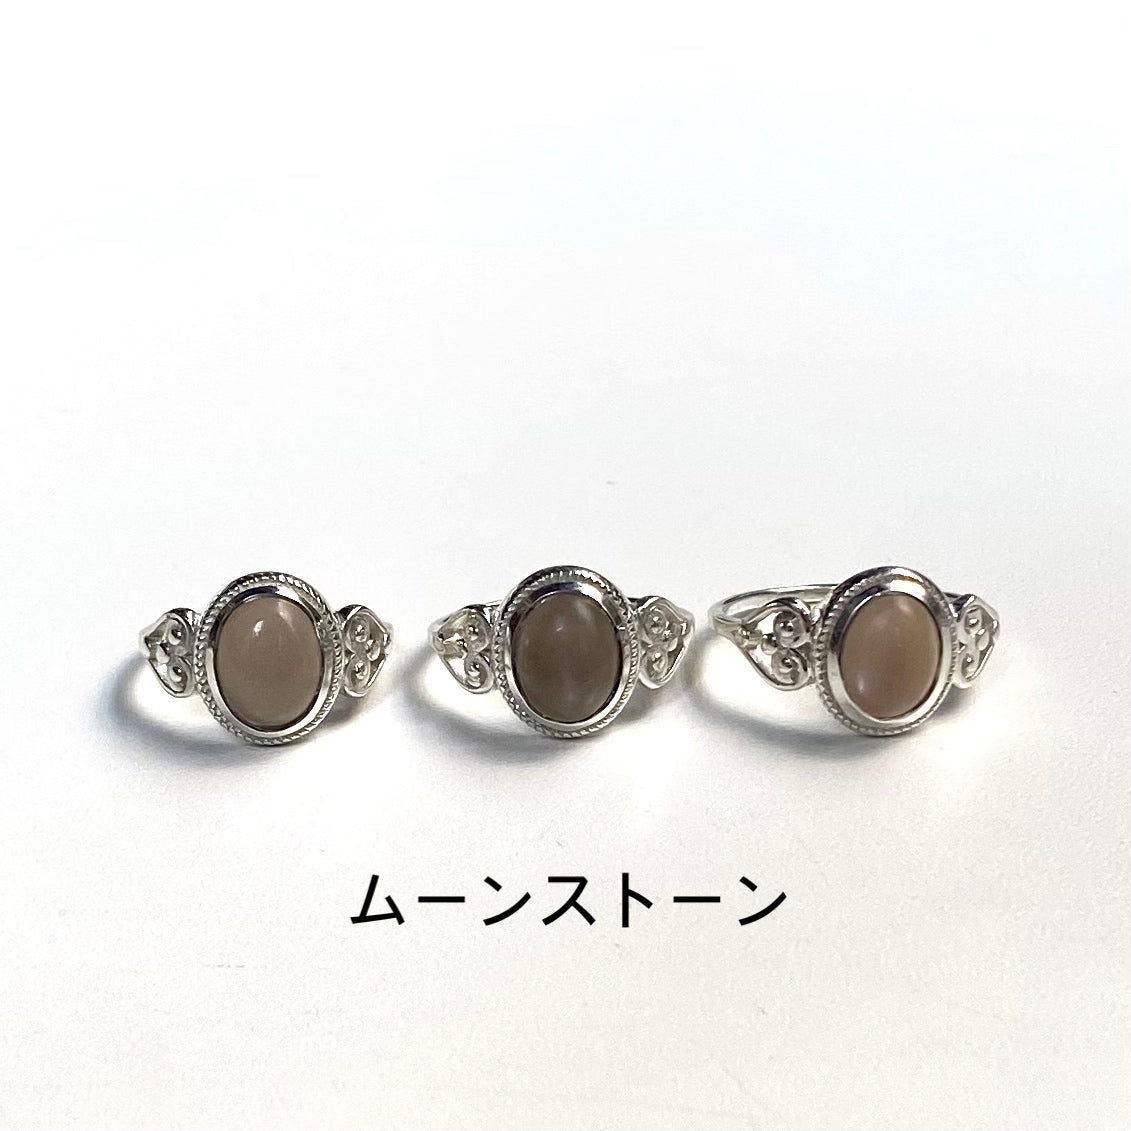 Silver925 design ring 6